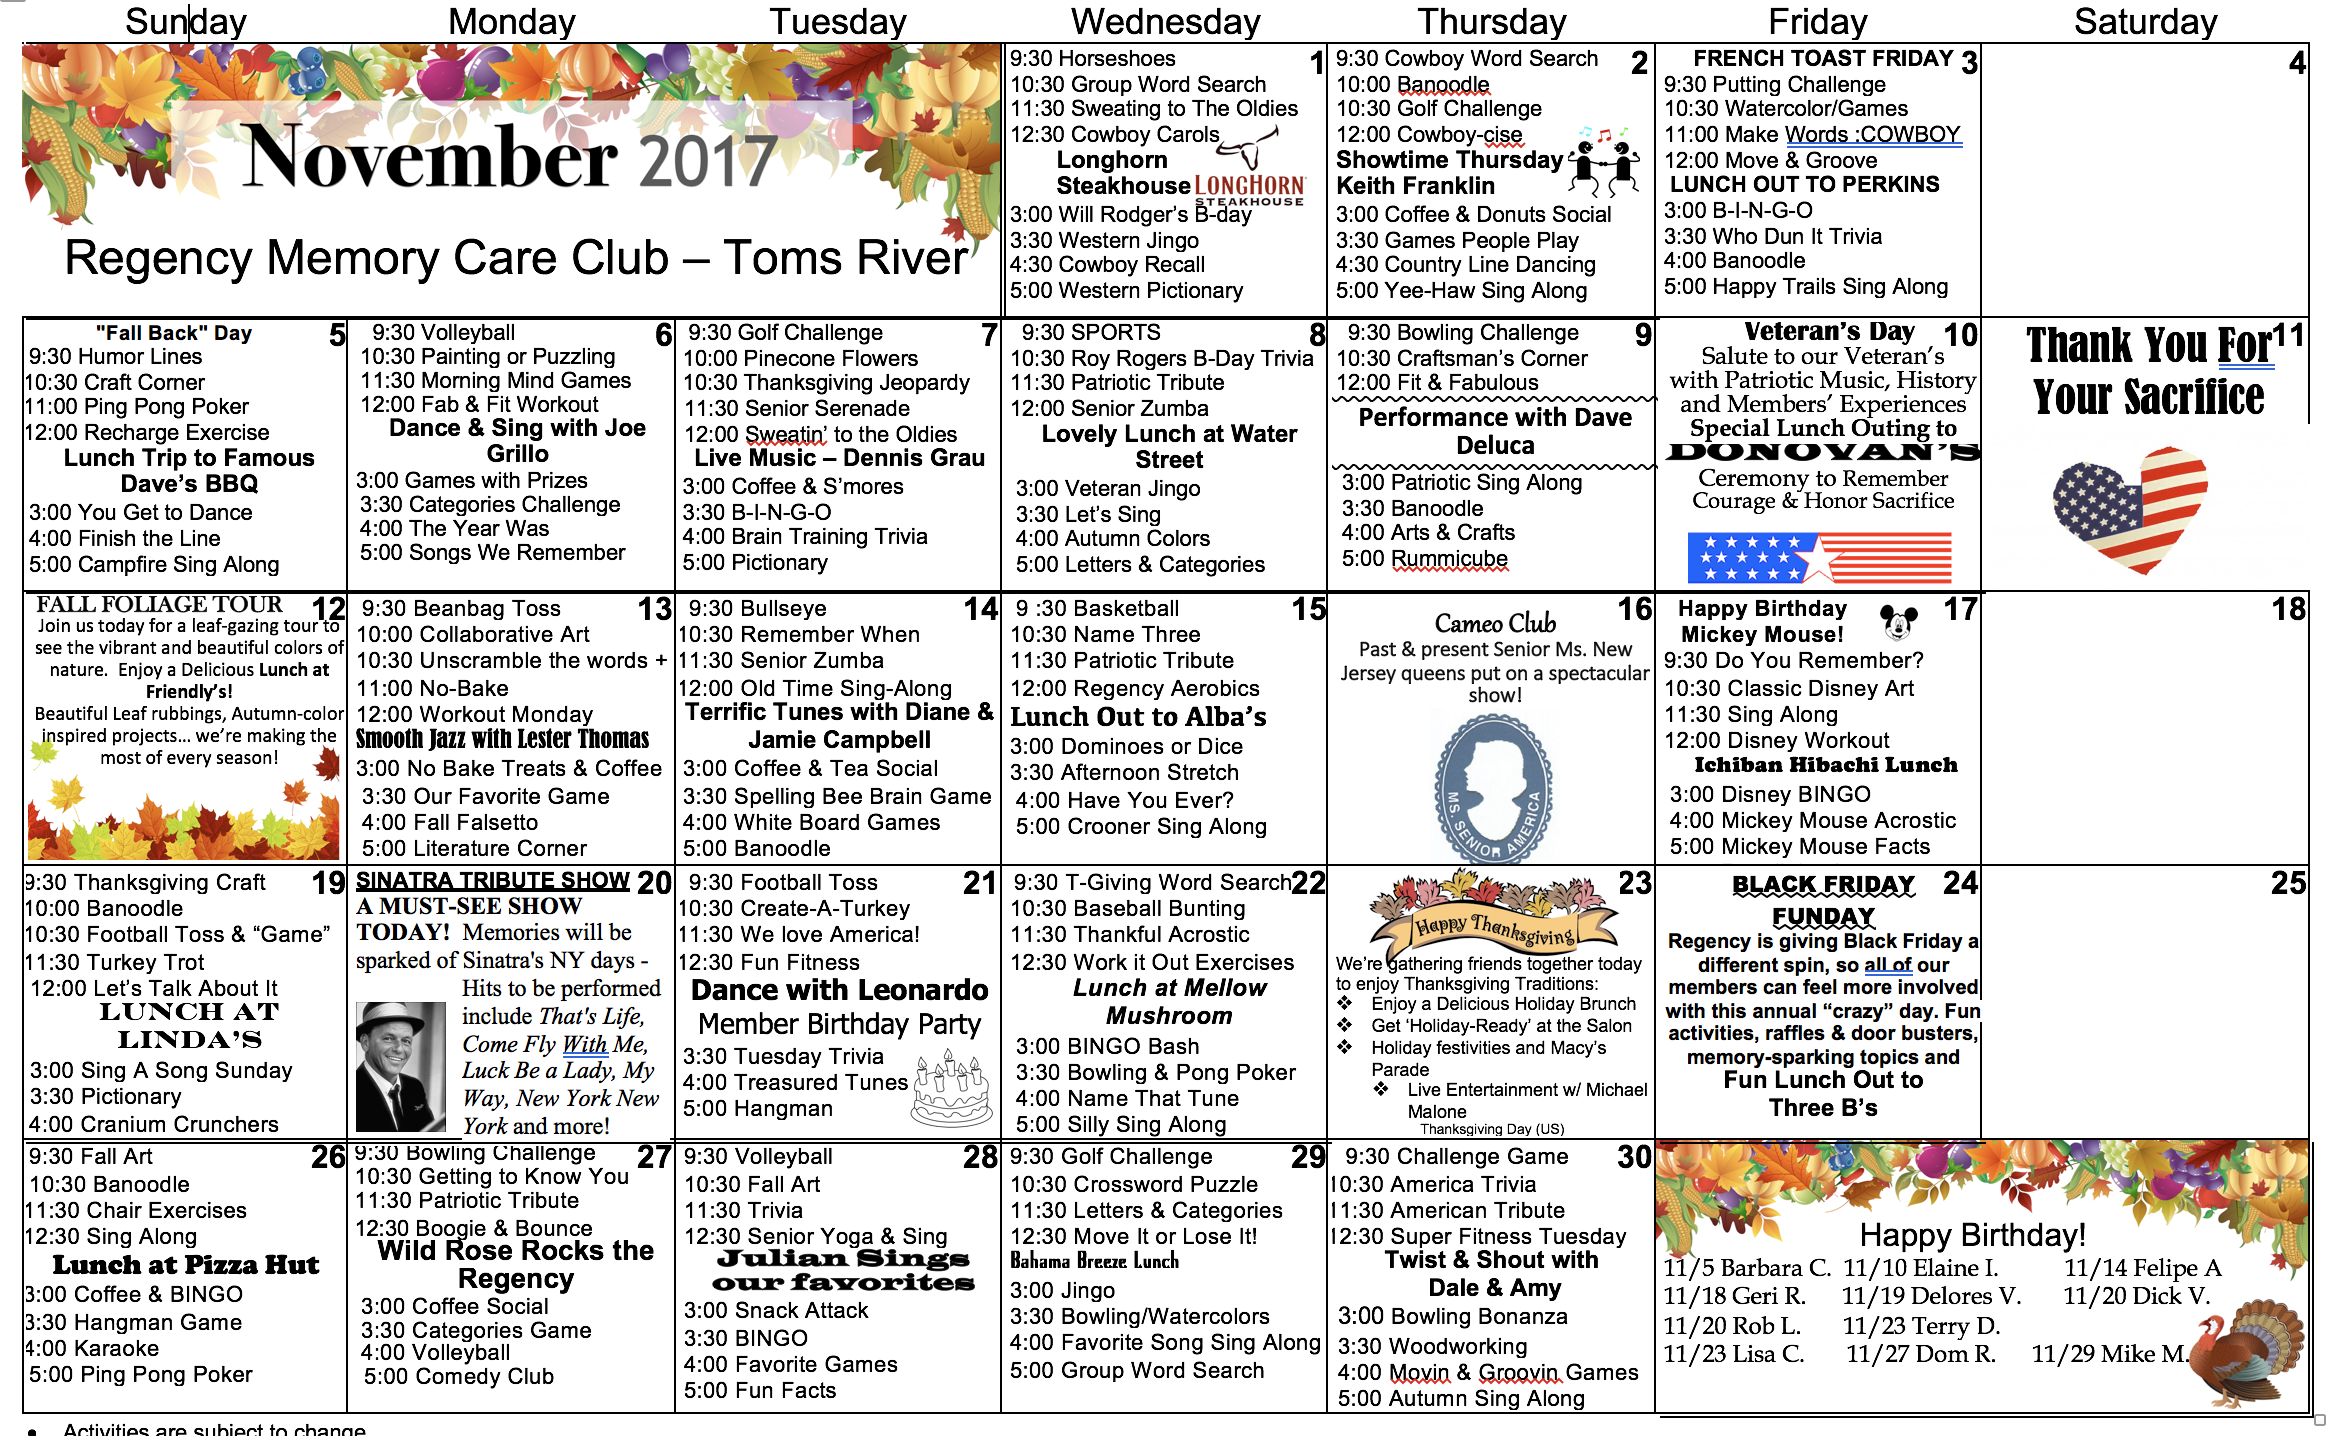 Toms River November Events